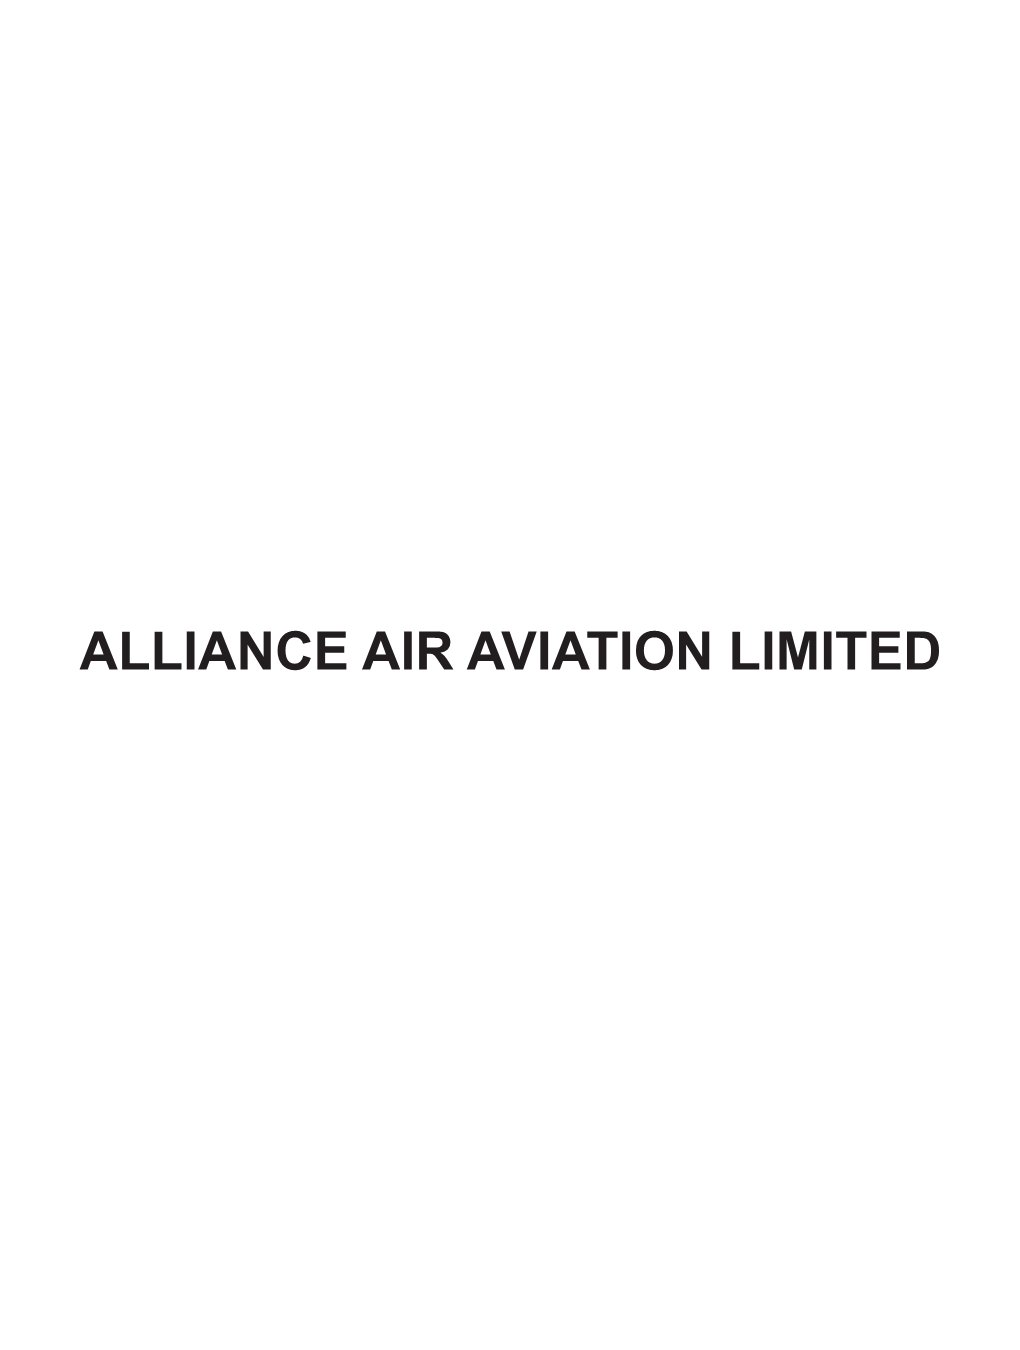 Alliance Air Aviation Limited